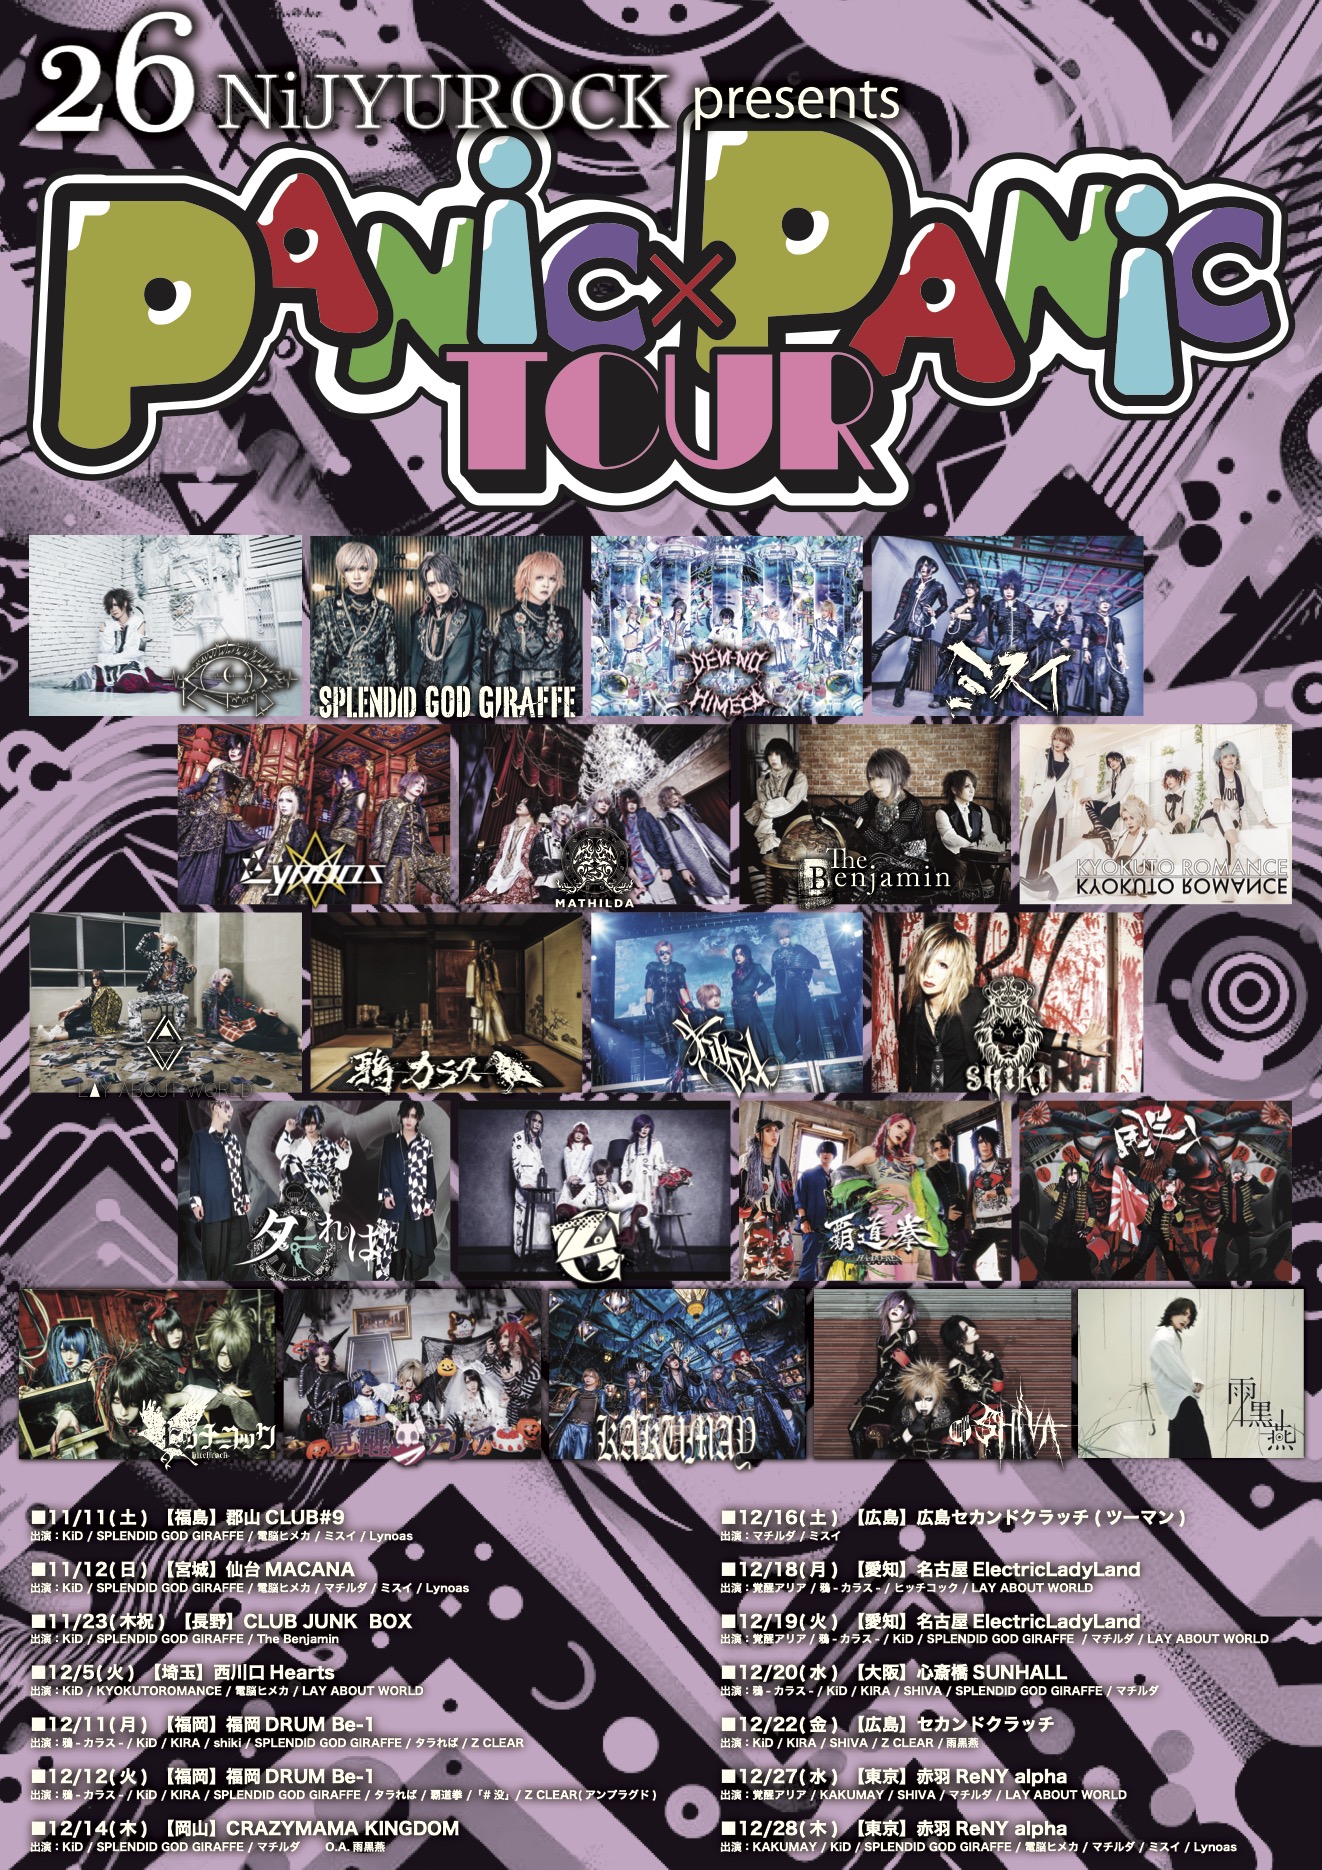 【名古屋12/18】26 NiJYUROCK presents PANiC×PANiC TOUR